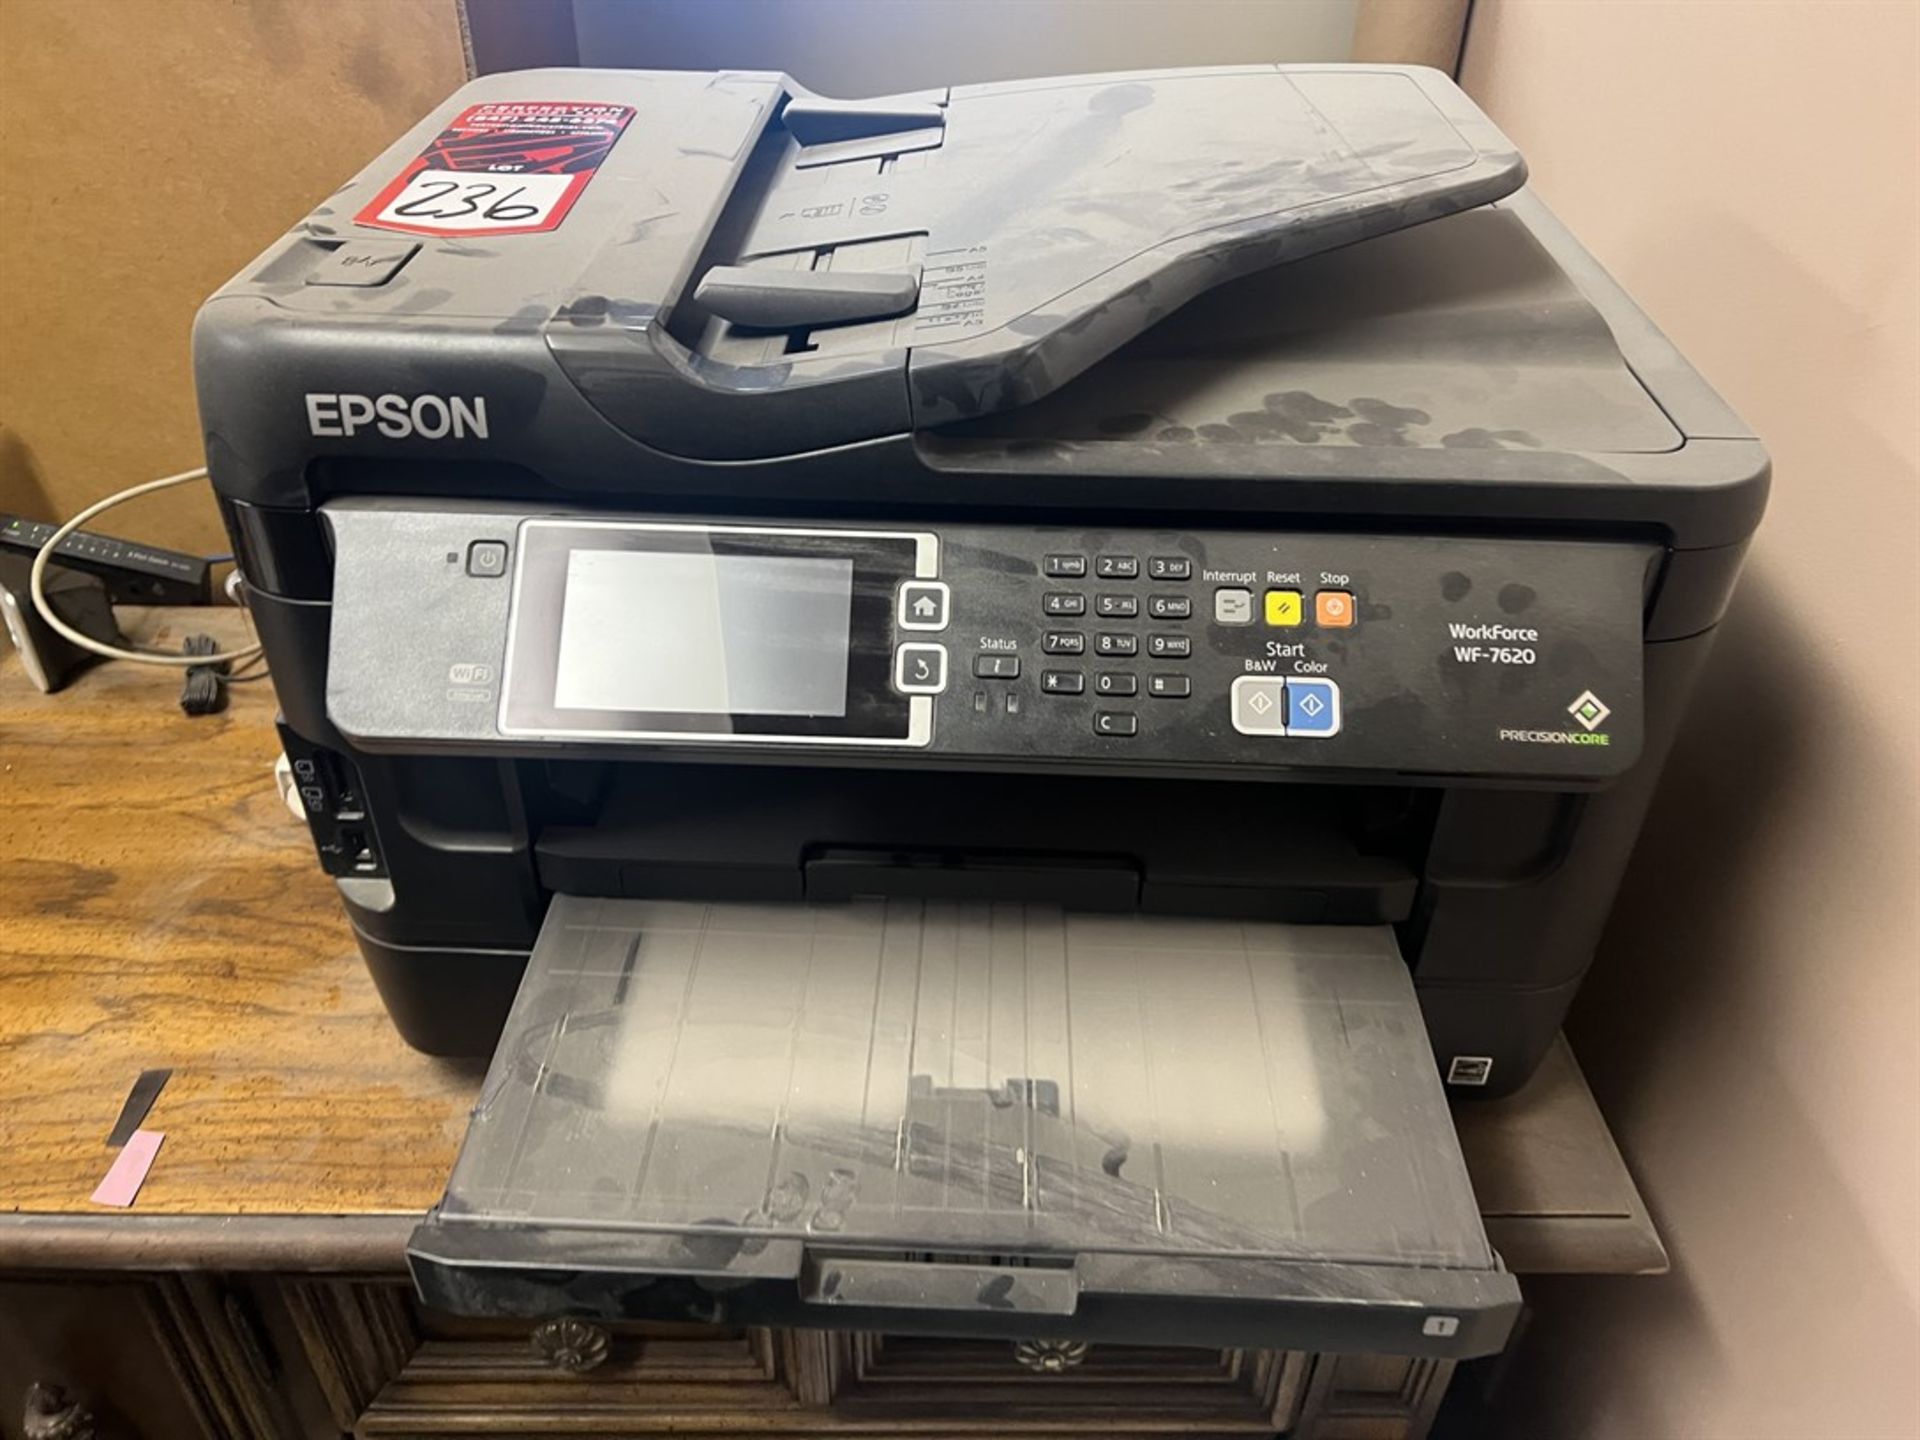 EPSON WF-7620 Workforce Printer - Image 2 of 4